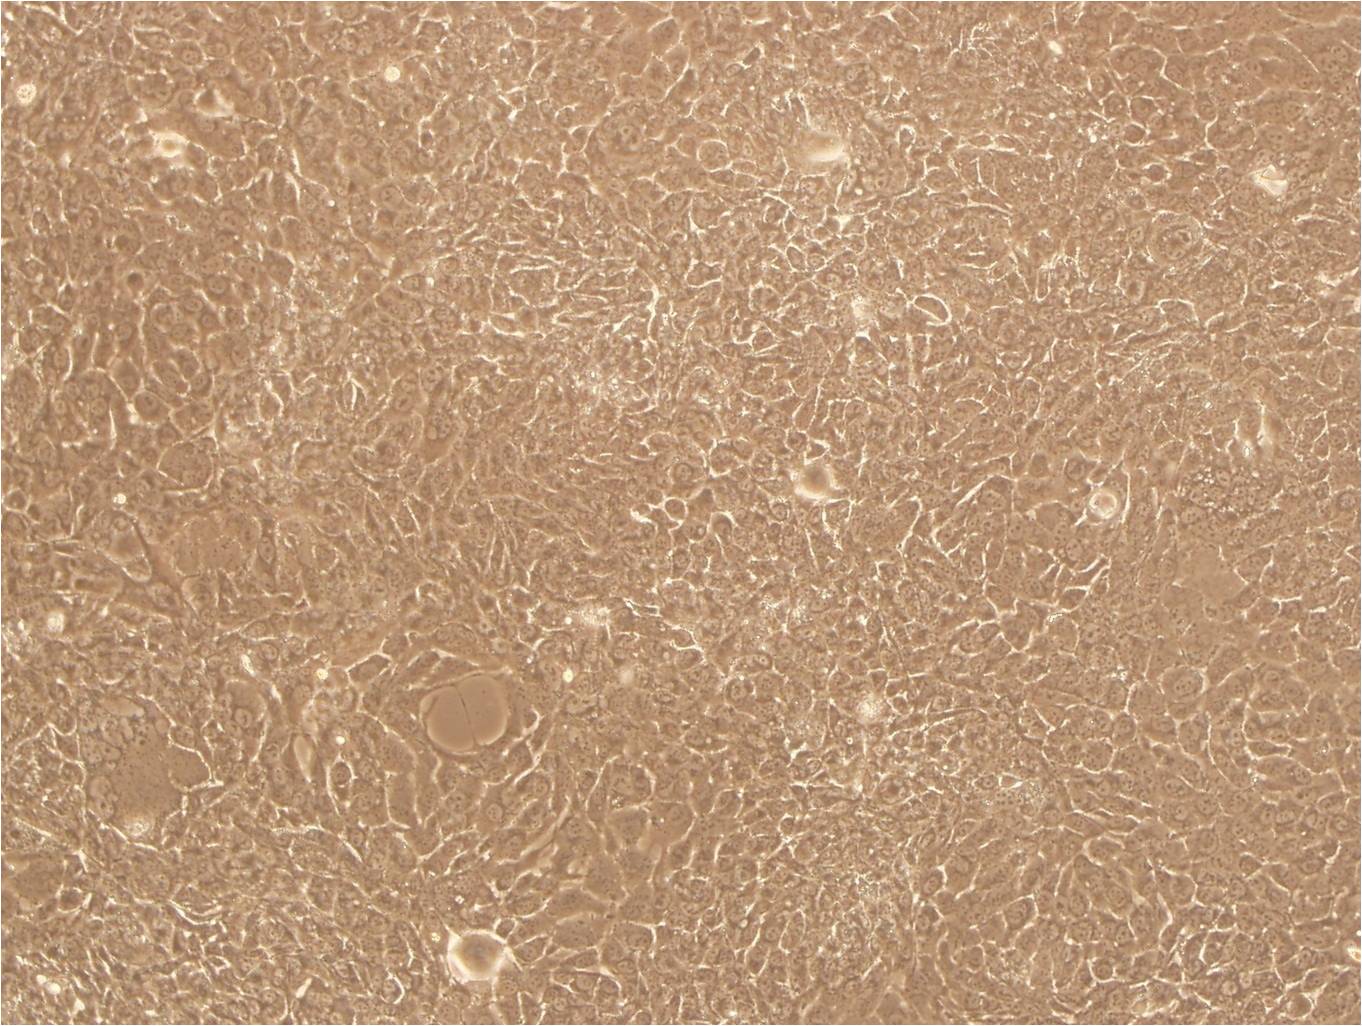 NCI-H157 Cells|人非小细胞肺腺癌可传代细胞系